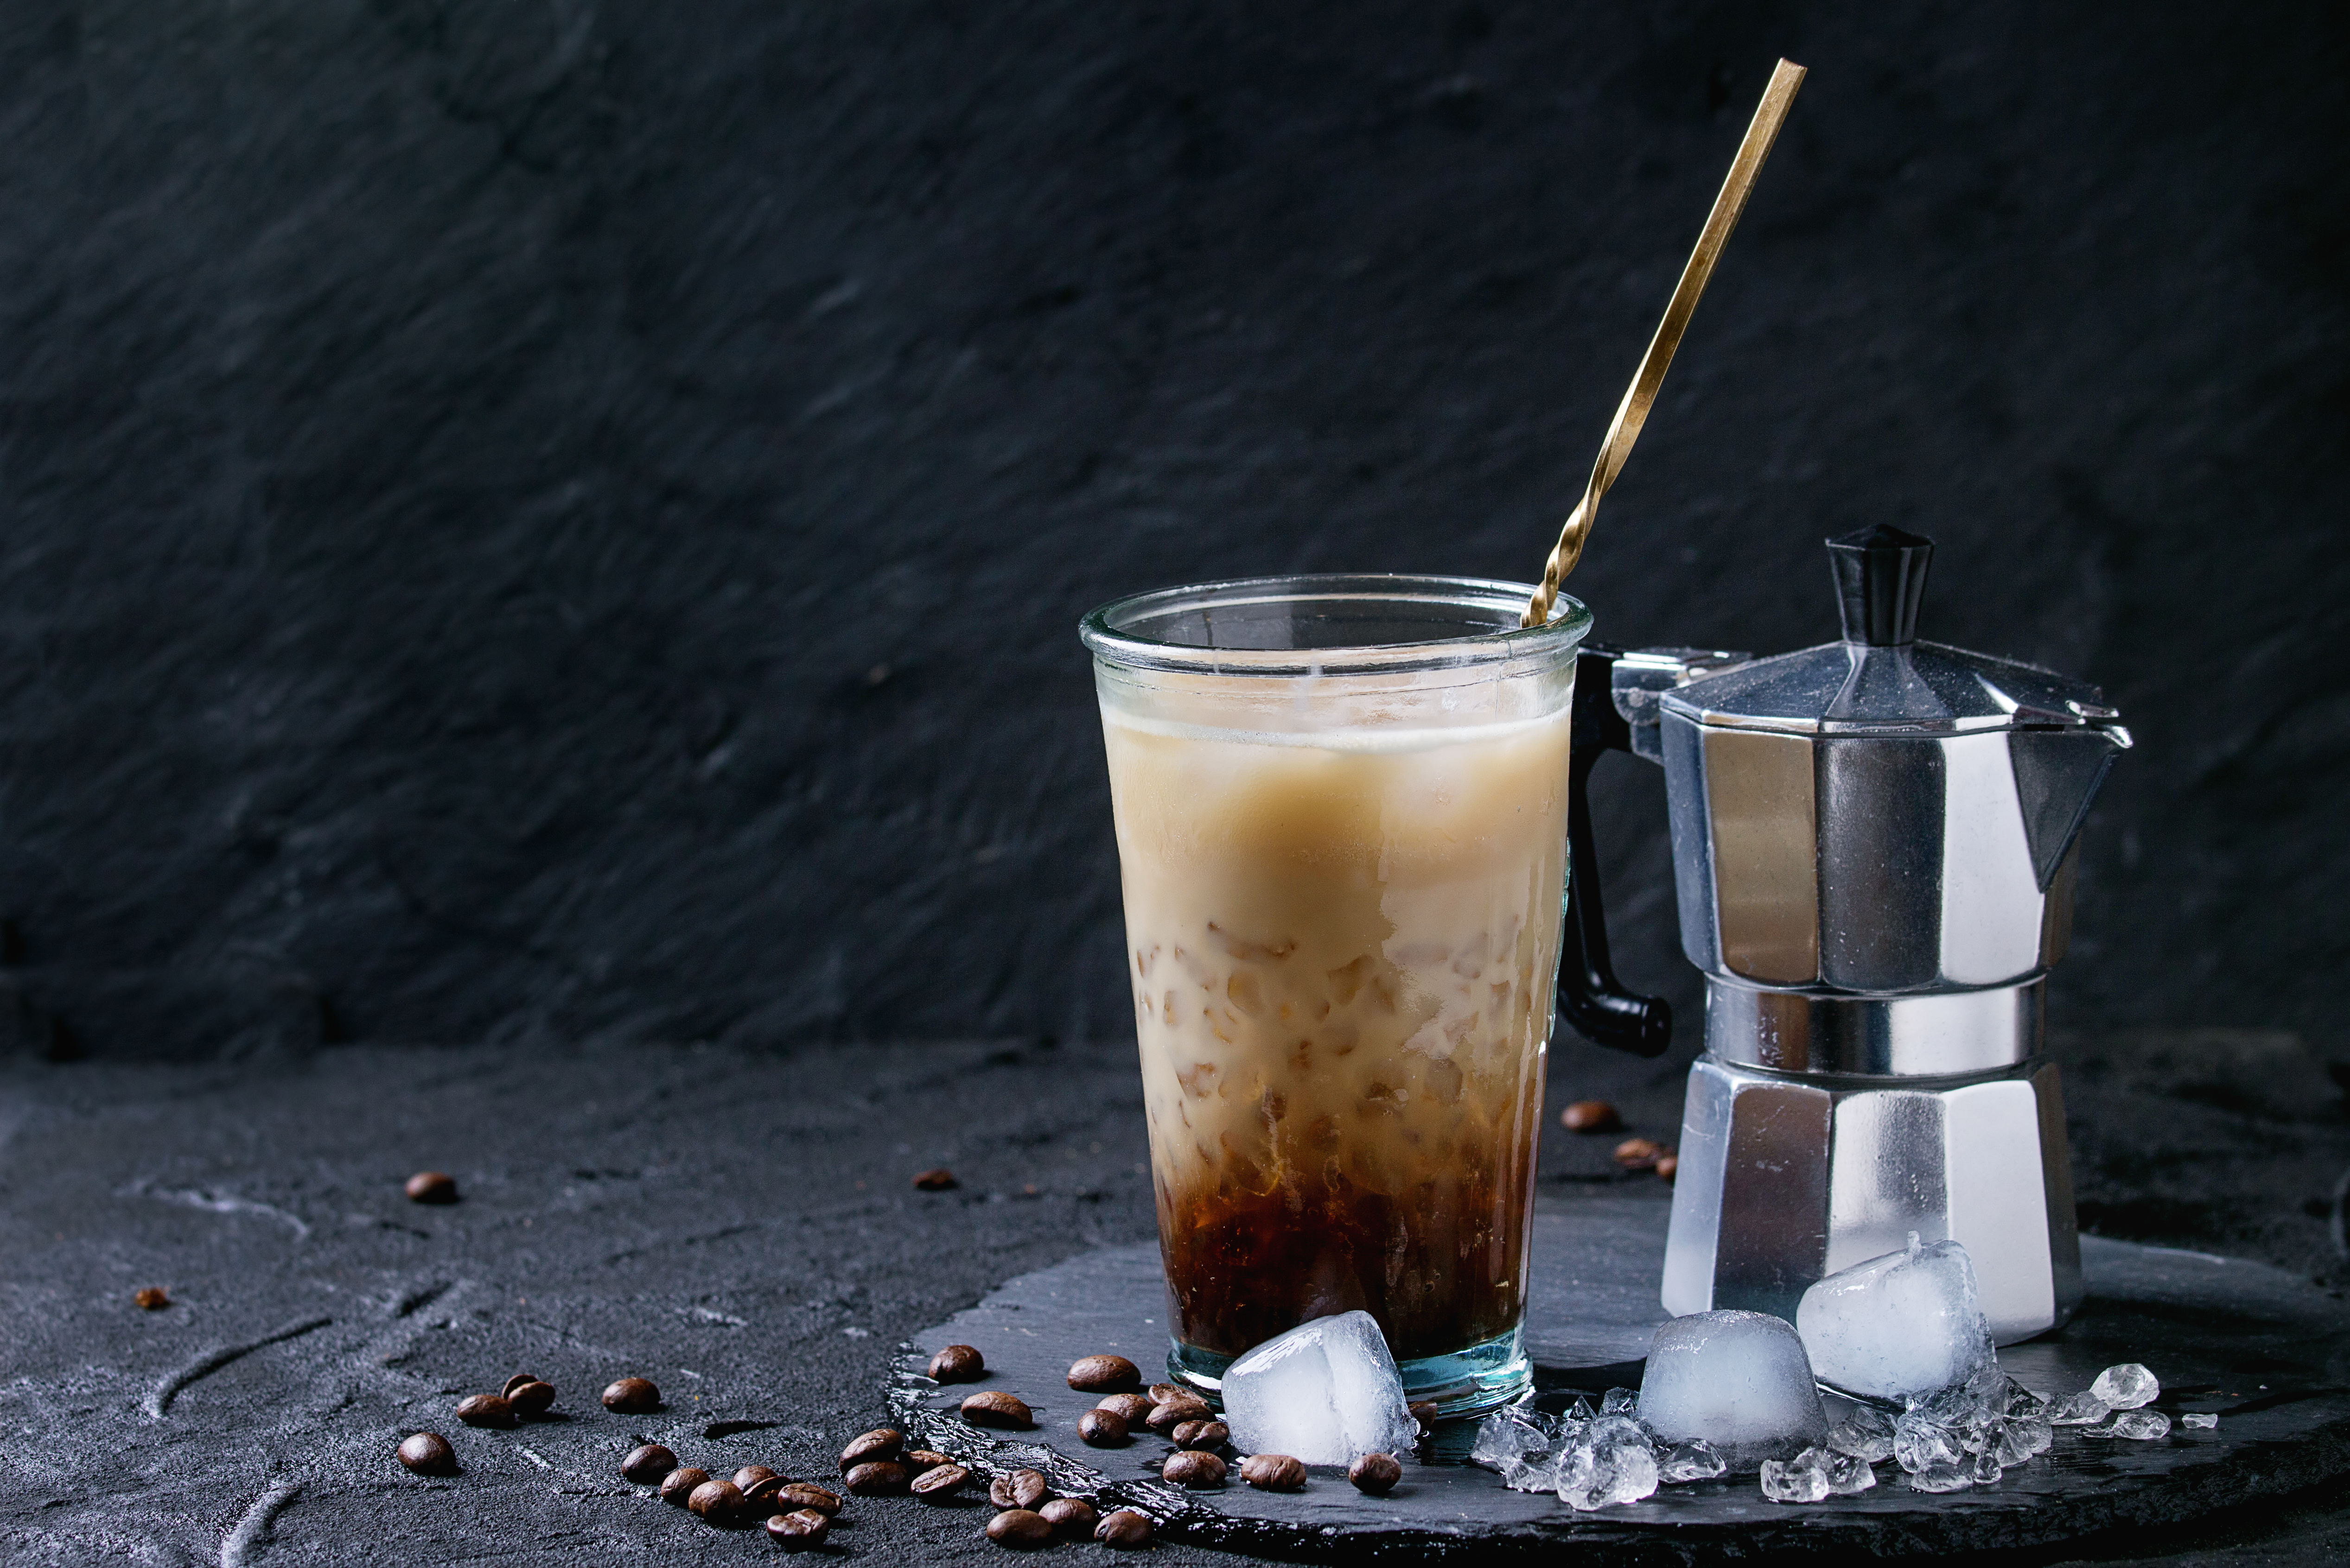 Keurig K-elite Single-serve K-cup Pod Coffee Maker With Iced Coffee Setting  : Target